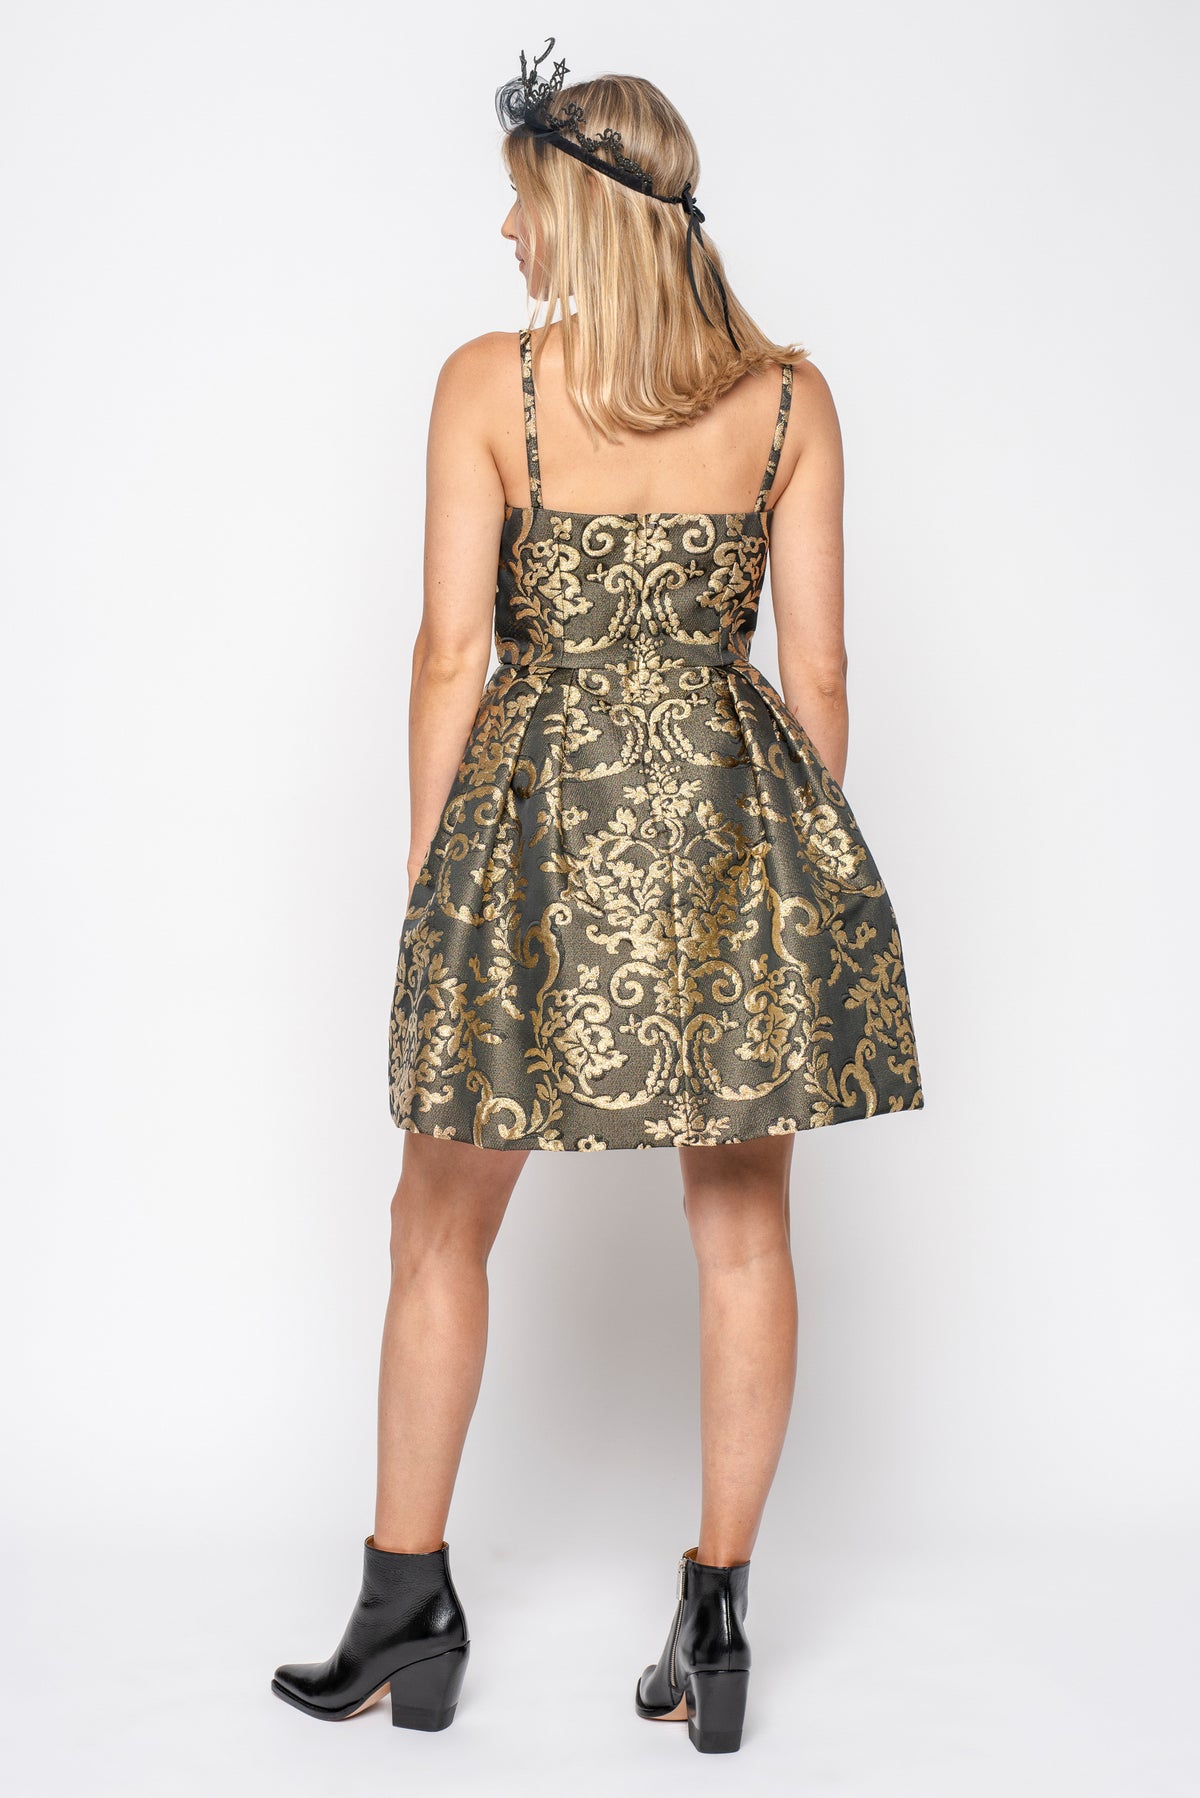 Dolce &amp; Gabbana Gold and Black Brocade Lurex Bustier Dress